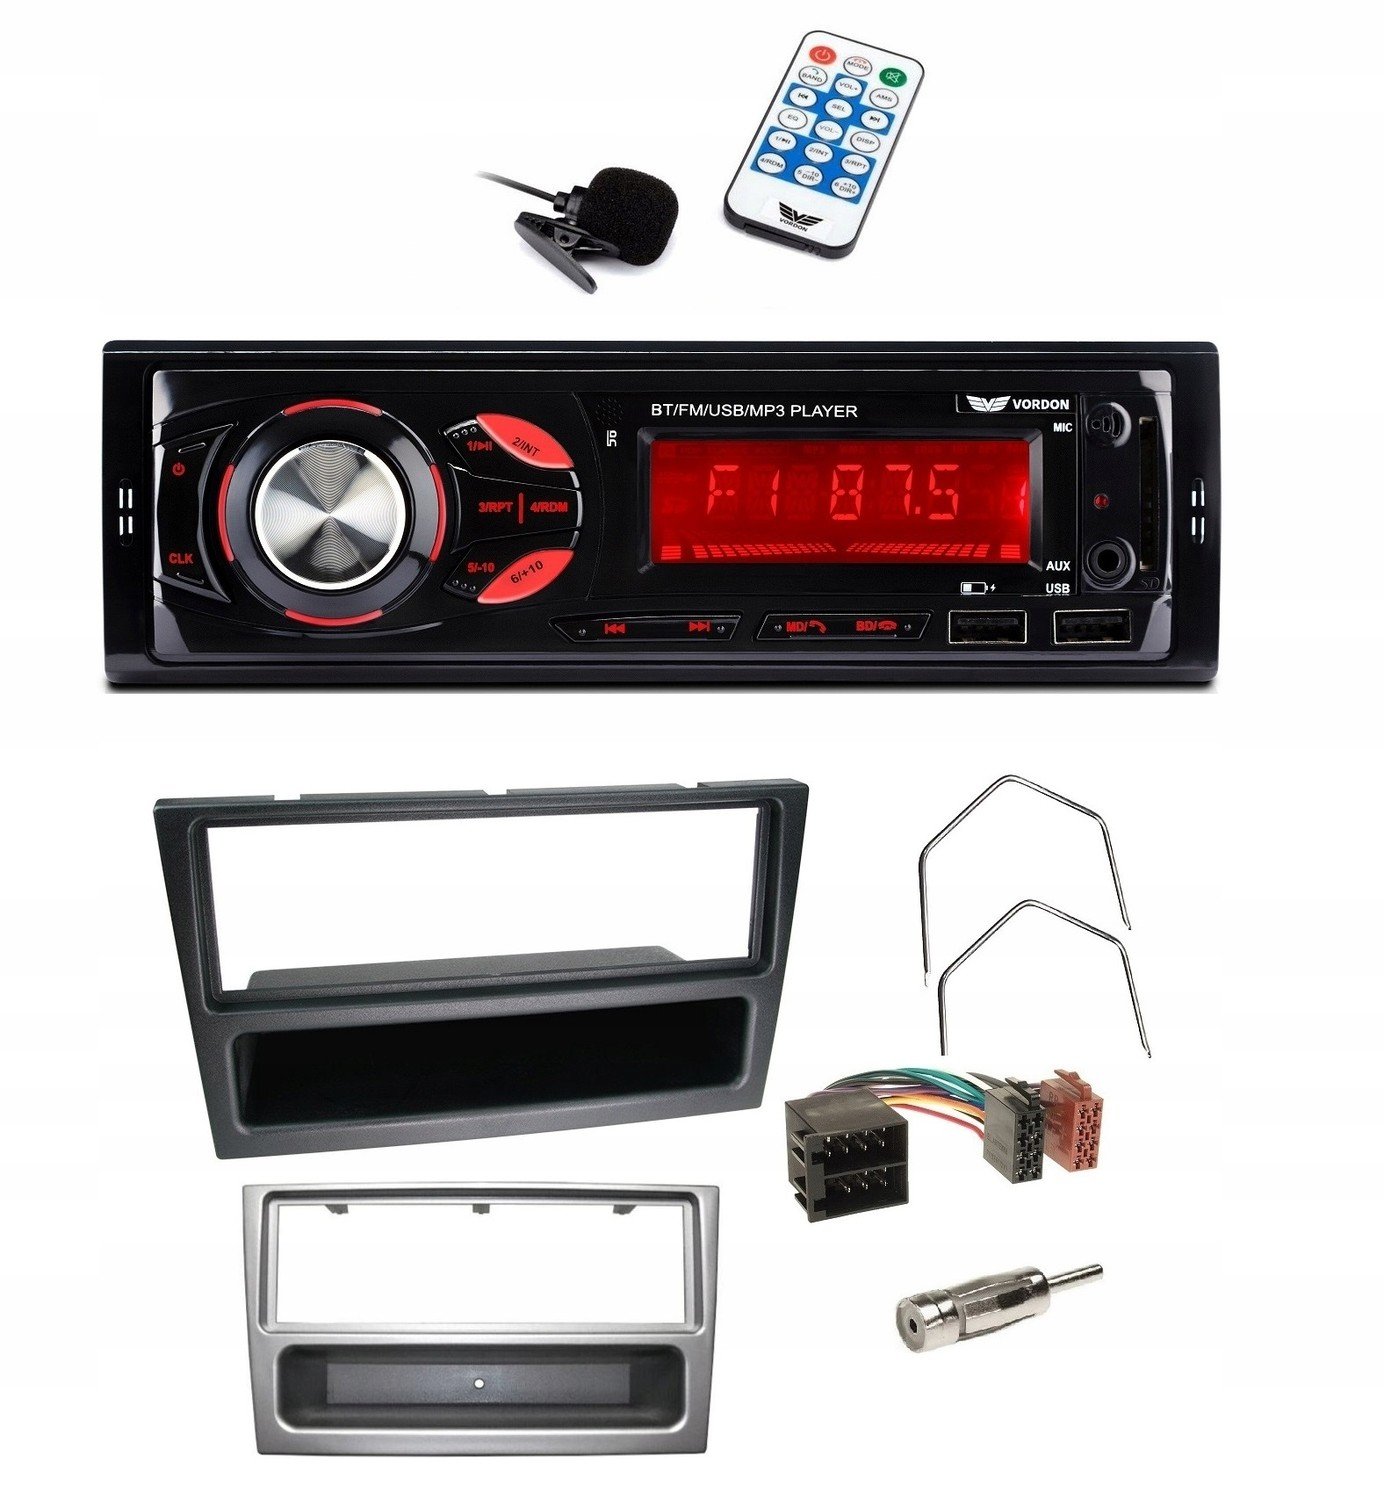 Vordon HT-175 Rádio Bluetooth Usb Audi A8 D2